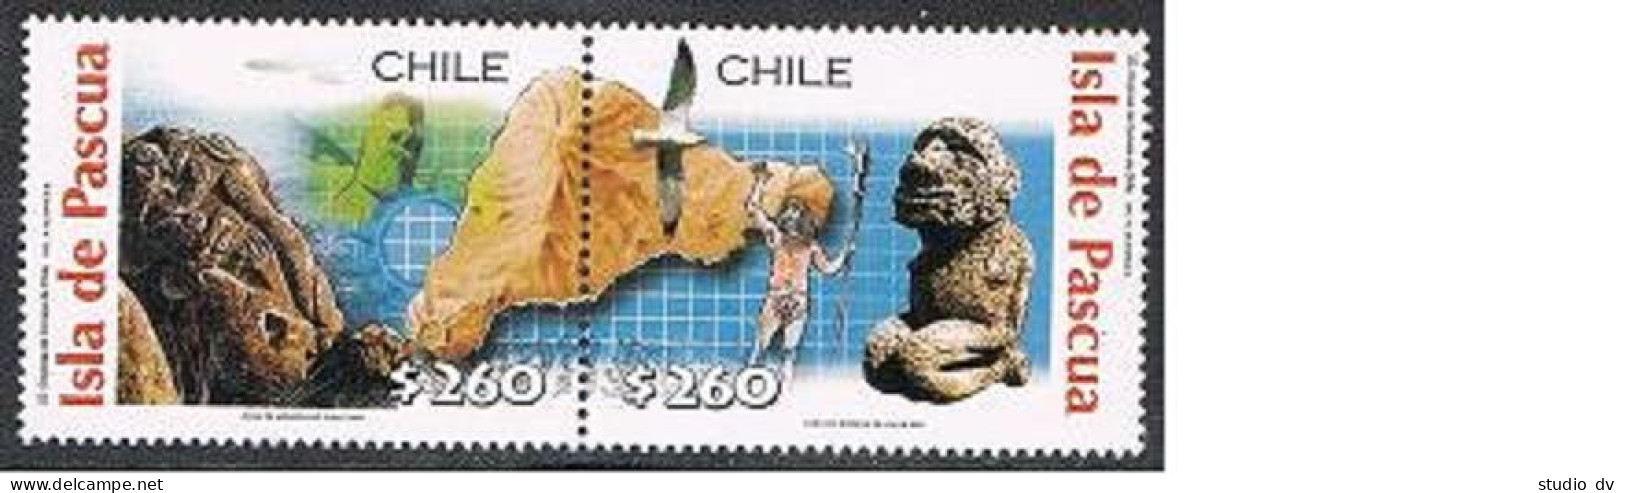 Chile 1361 Pair-label, MNH. Easter Island 2001. Bird, Artifact, Map.  - Chili